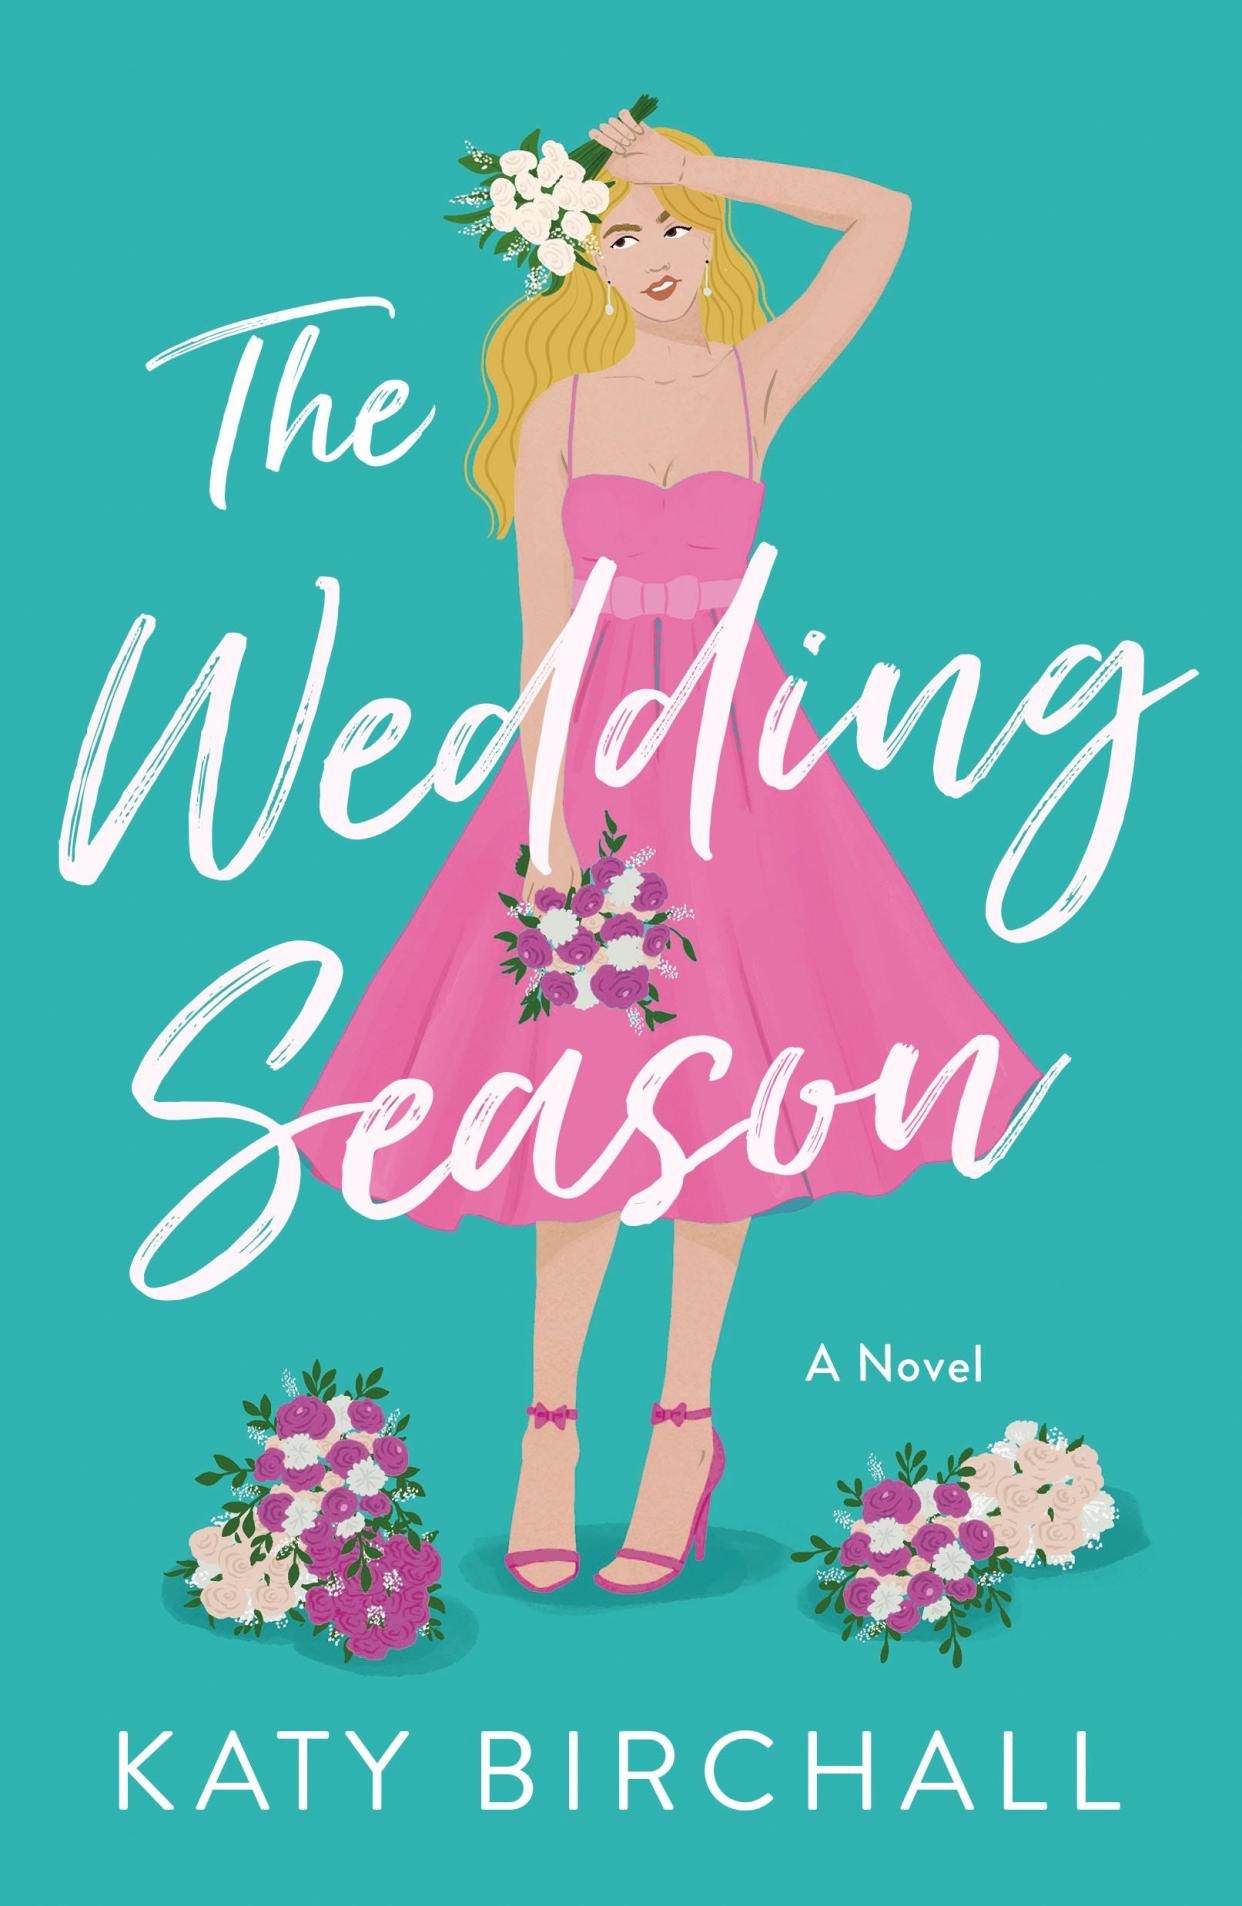 "The Wedding Season," by Katy Birchall